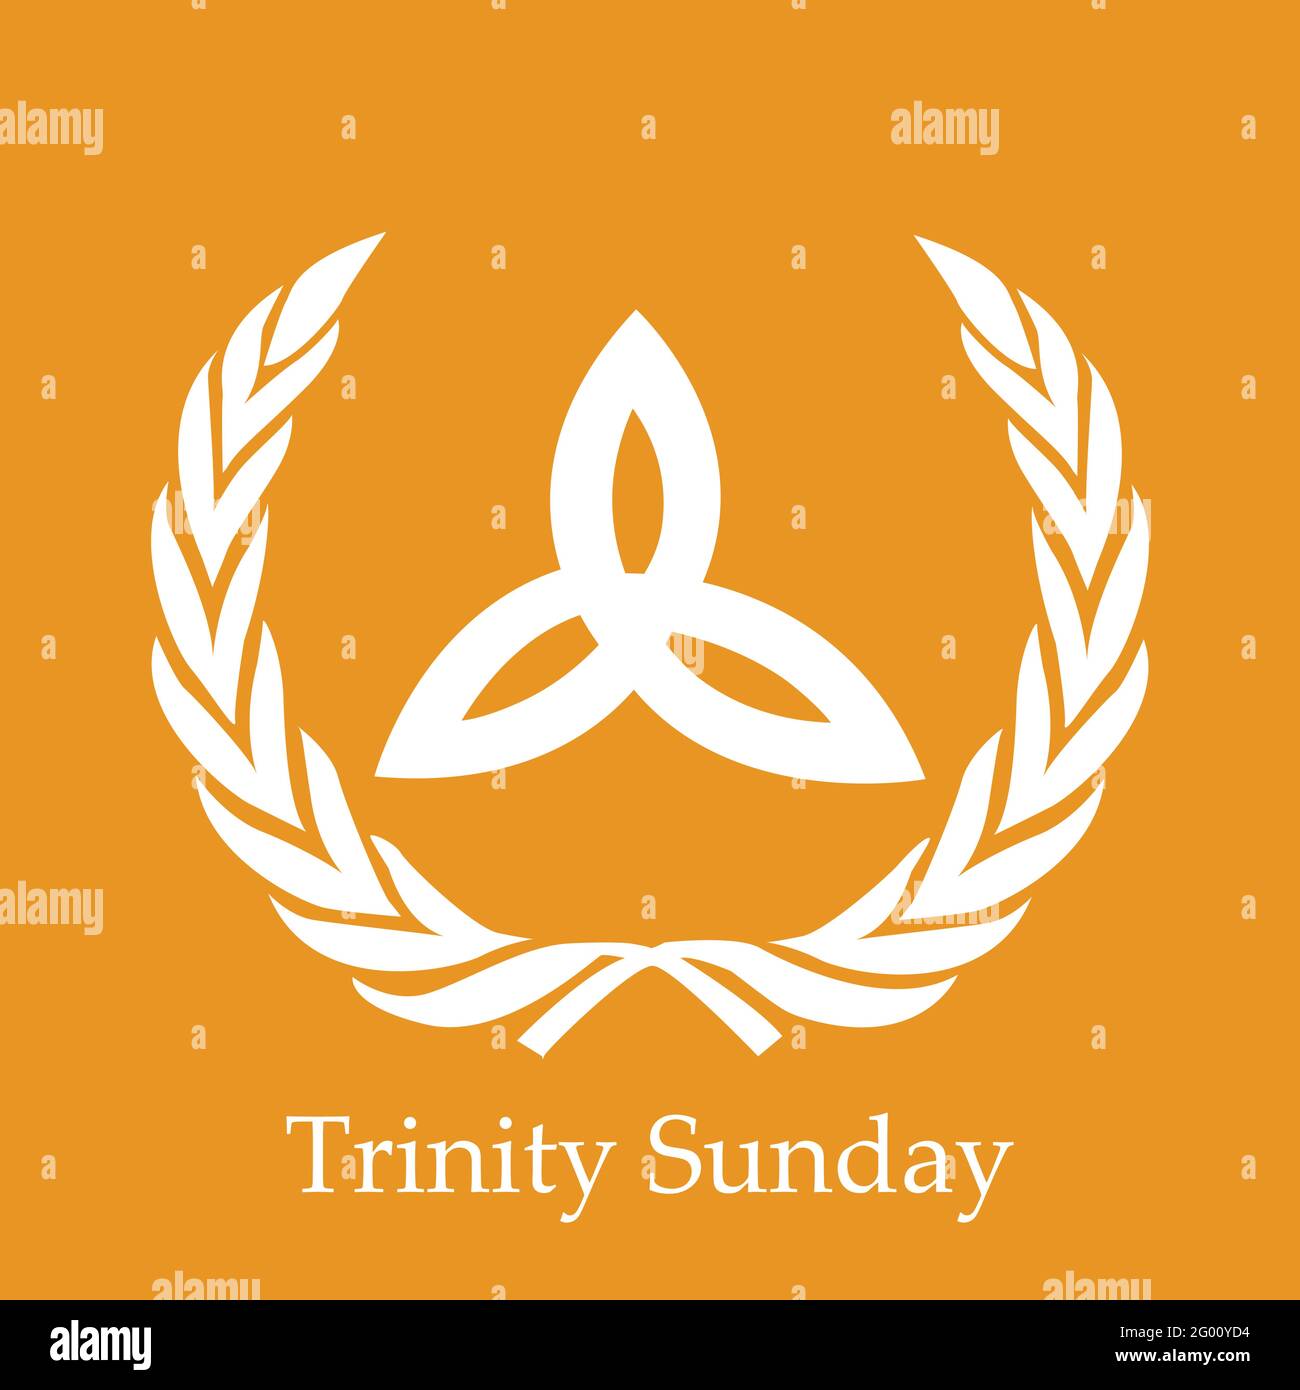 illustration of Trinity Sunday background Stock Vector